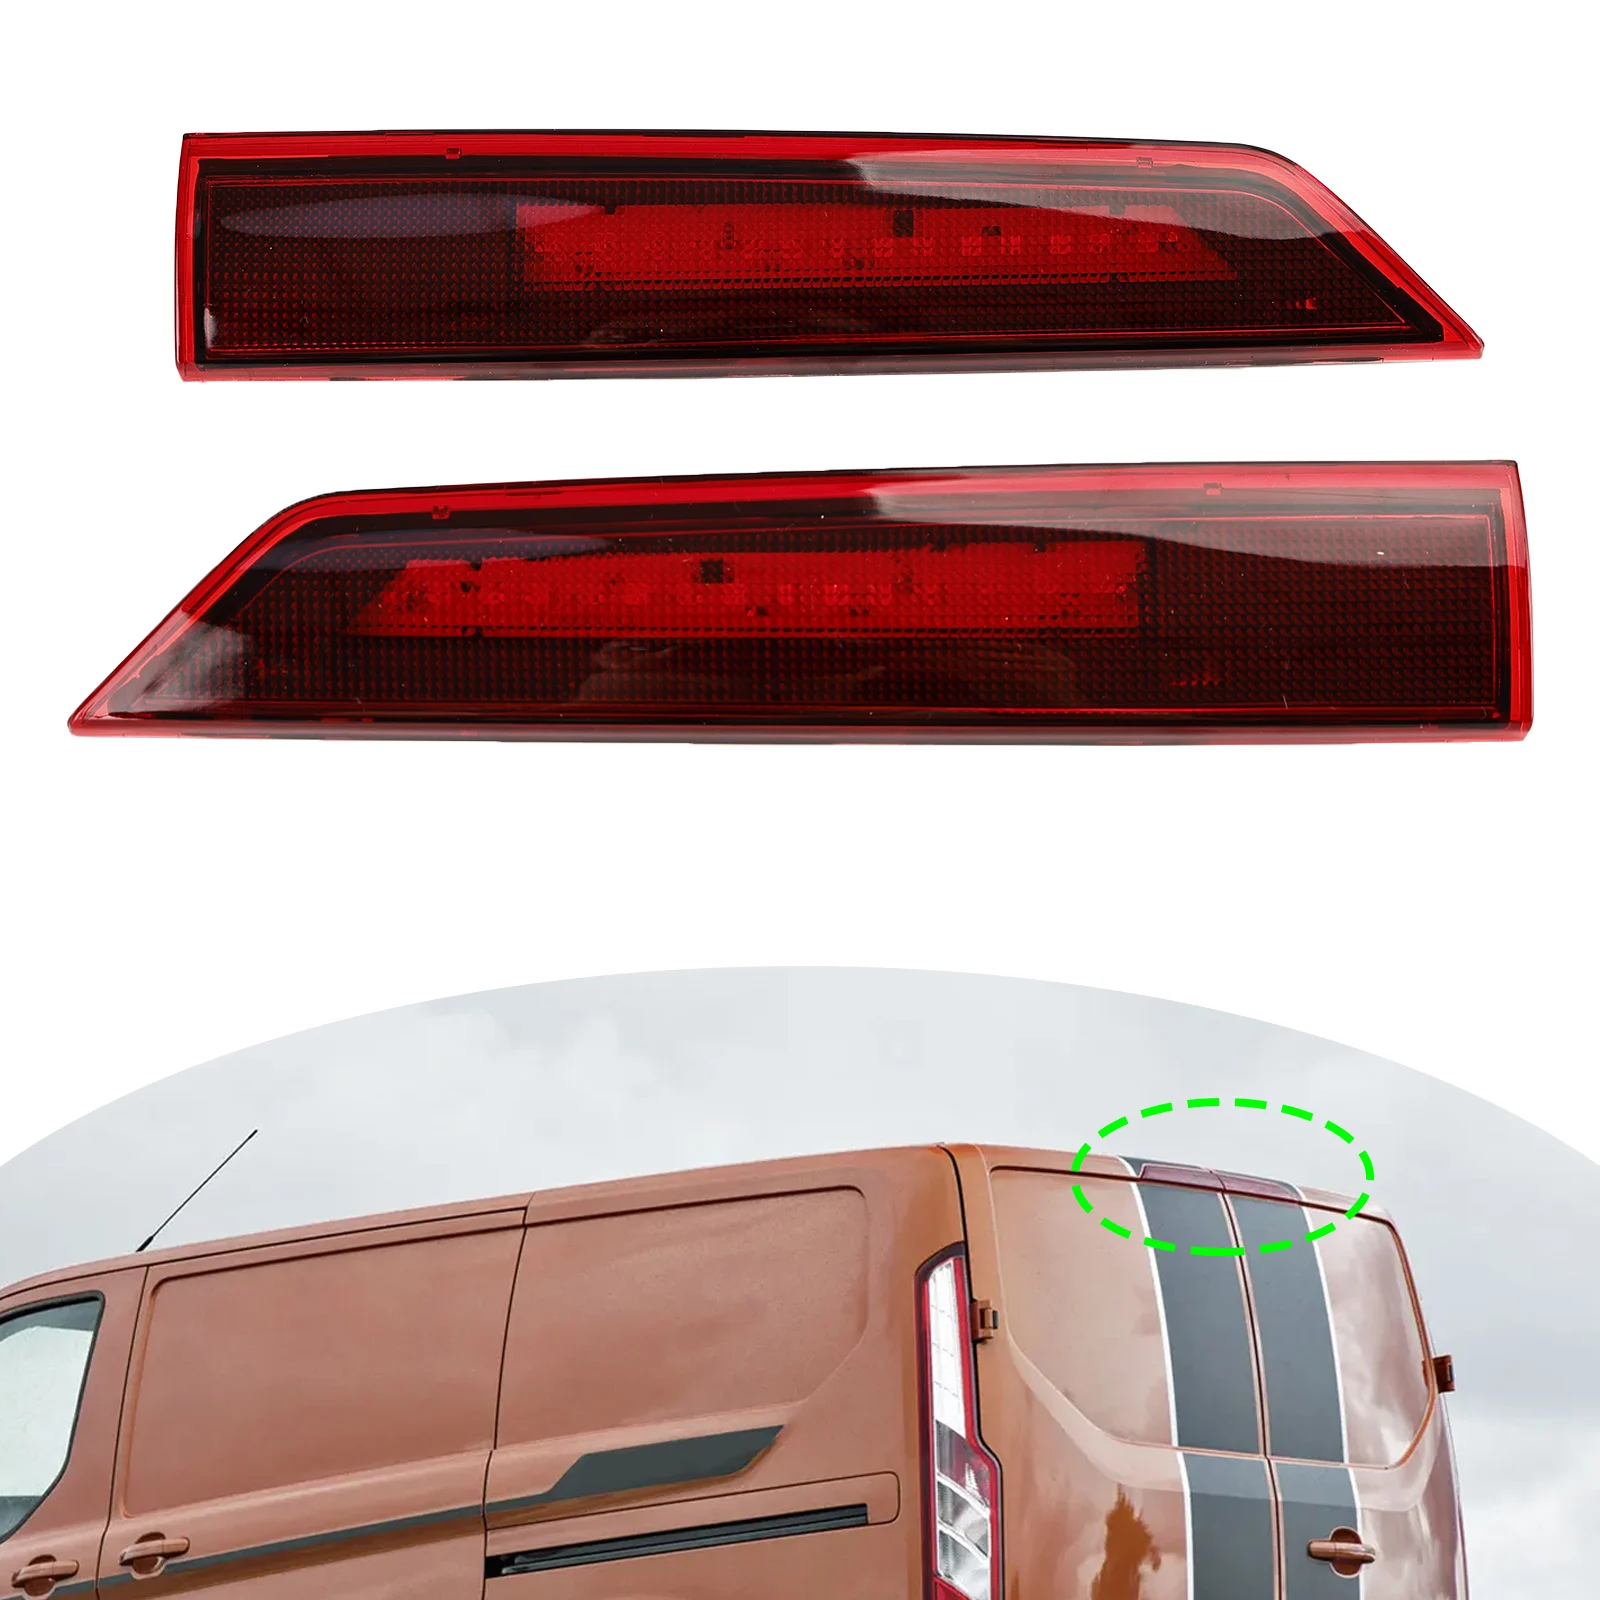 

Areyourshop 2x High Level 3rd LED Rear Brake Light For Ford Transit Tourneo Custom Barn Door